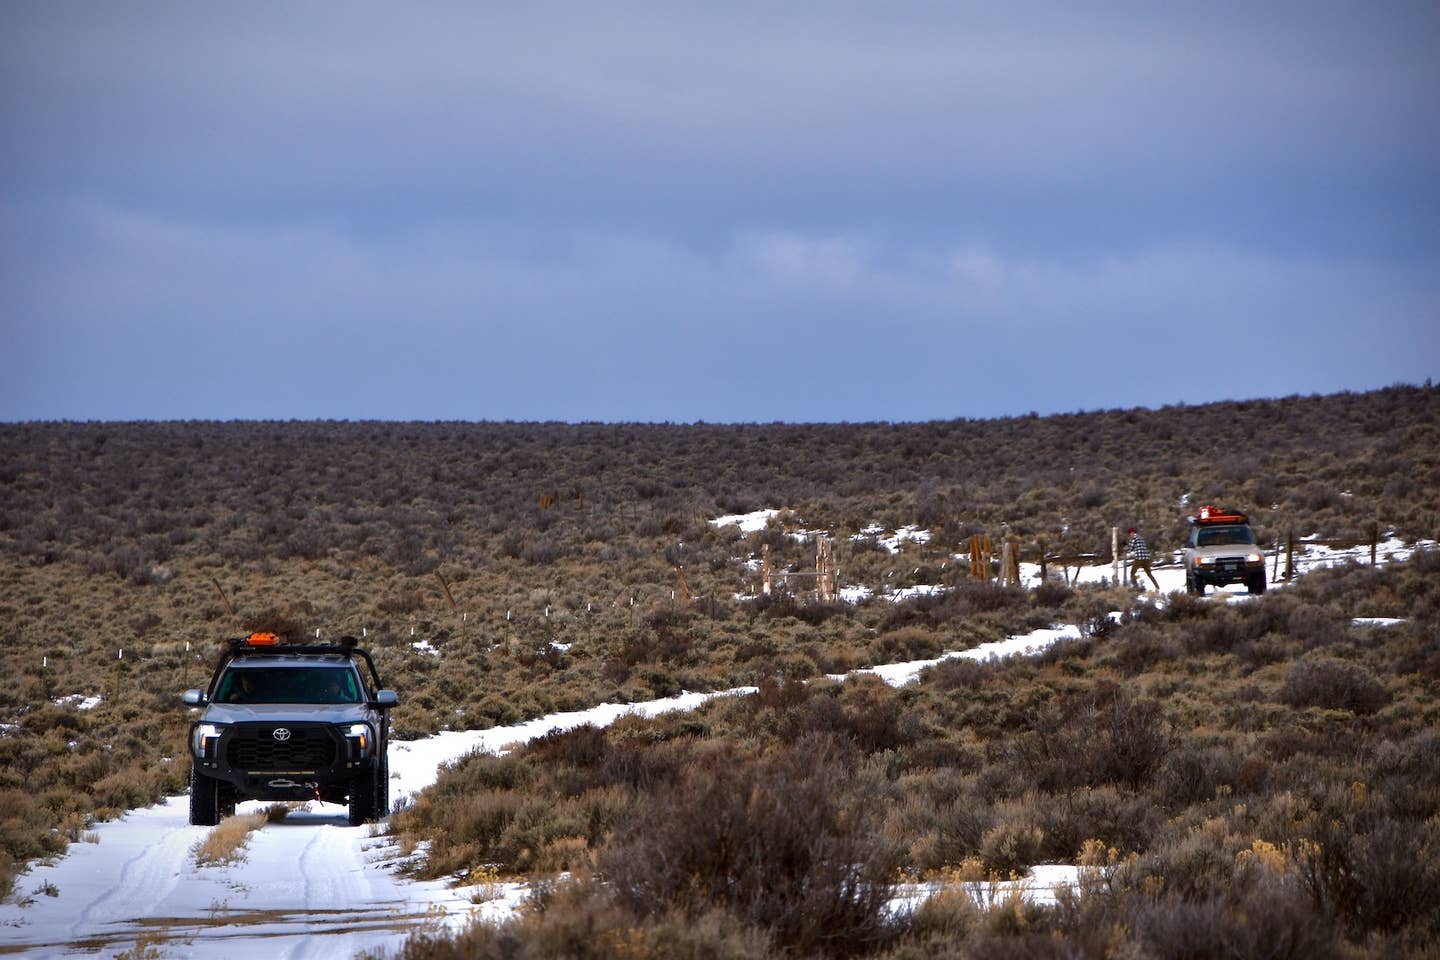 A Toyota Tundra leads a Land Cruiser (80-series) down a snowy trail